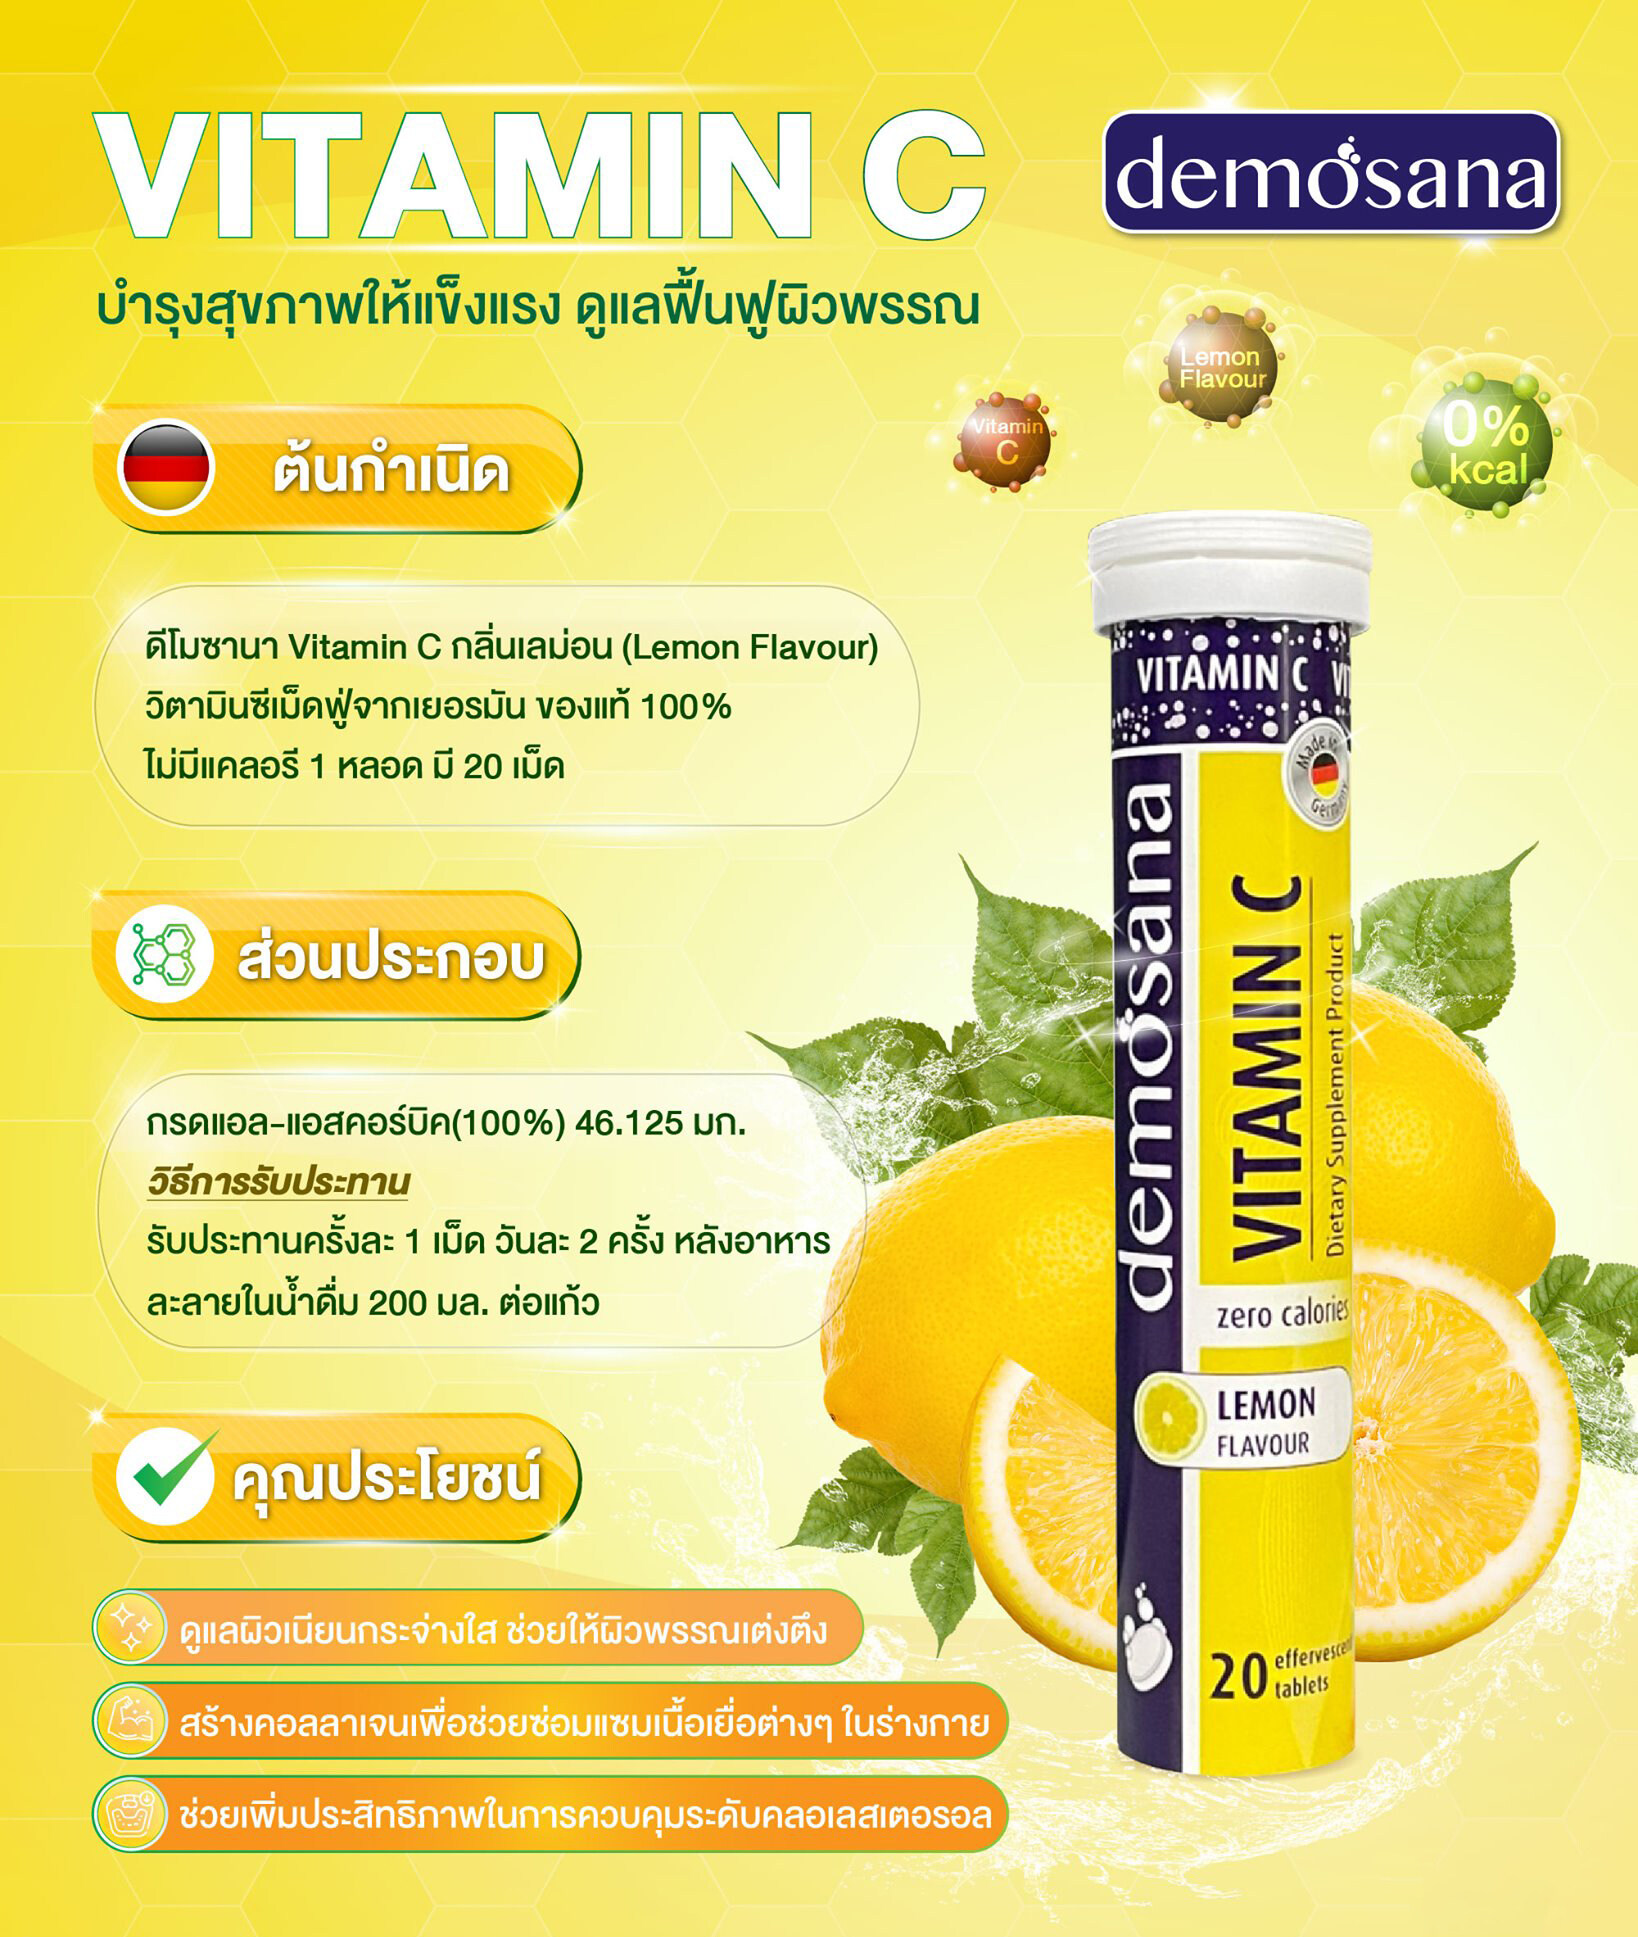 Demosana Vitamin C Dietary Supplement Product ดีโมซานา ผลิตภัณฑ์เสริมอาหาร วิตามินซี ขนาด 20 เม็ด | Lazada.co.th